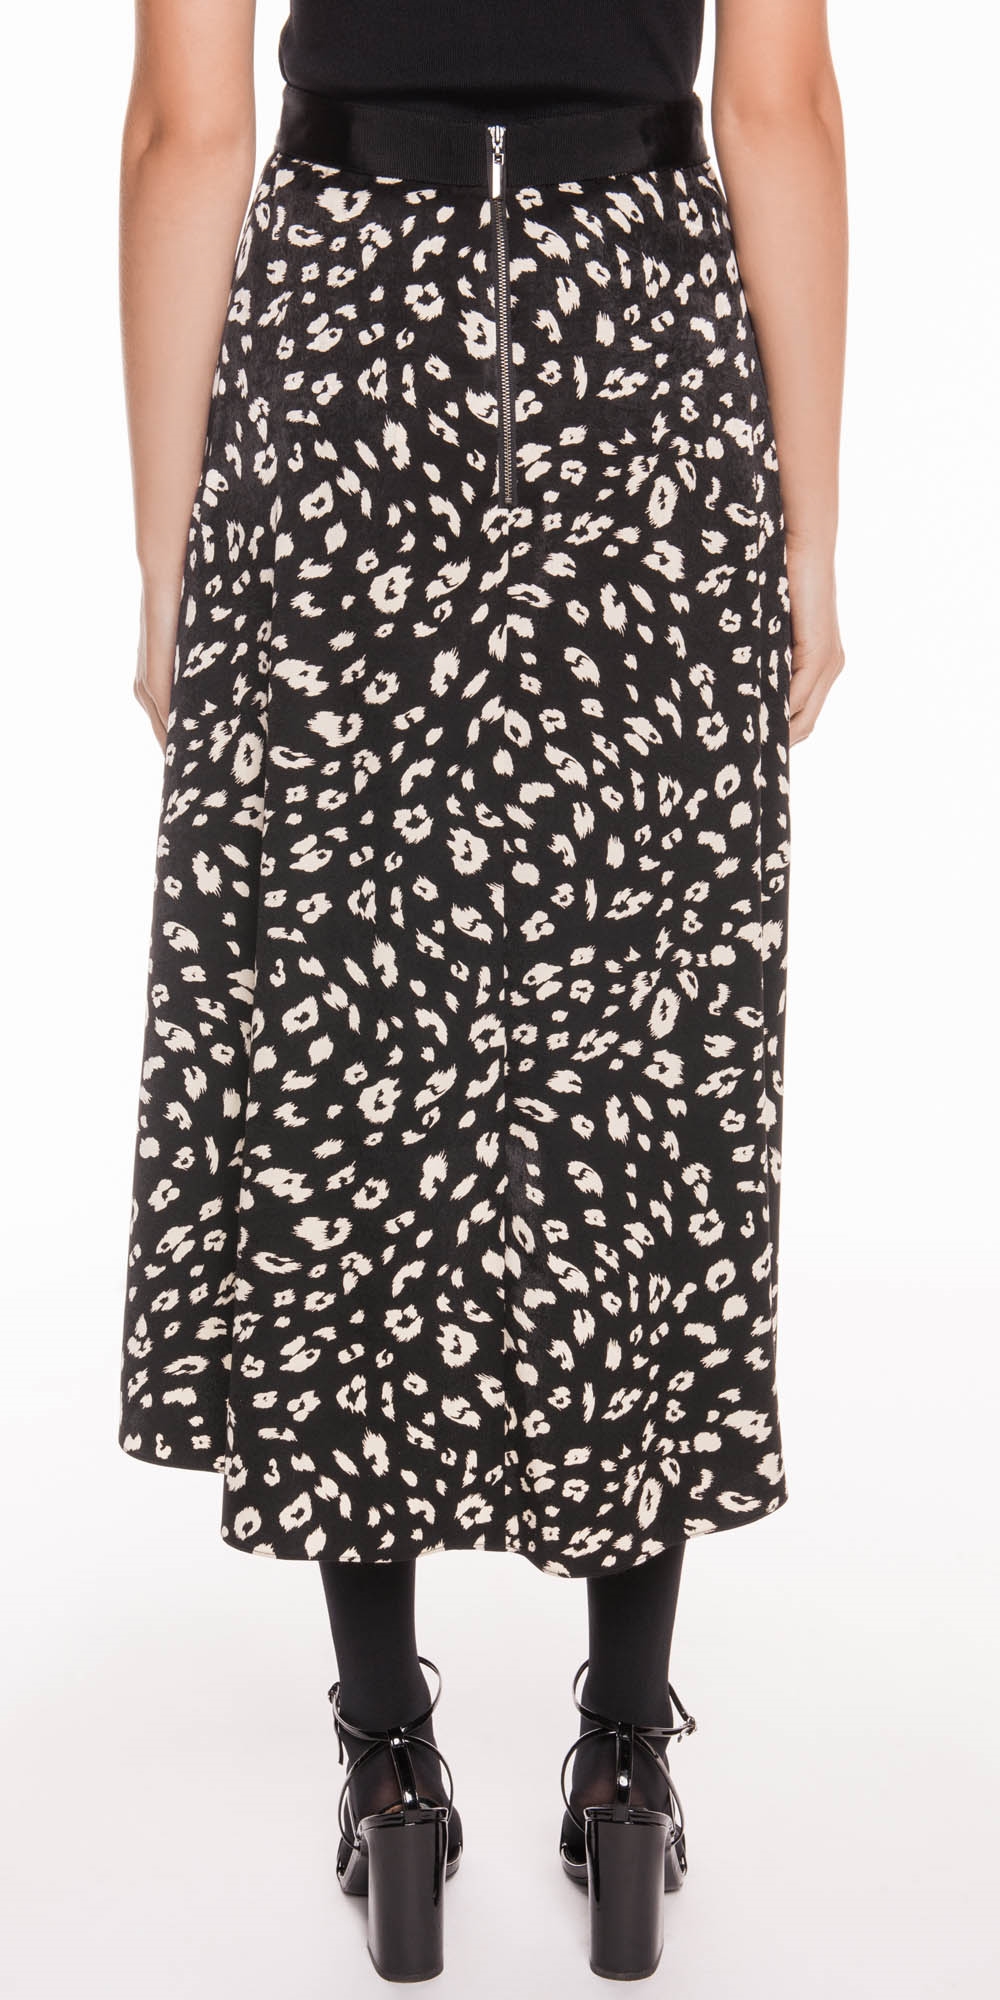 Leopard Satin Midi Skirt | Buy Skirts Online - Cue